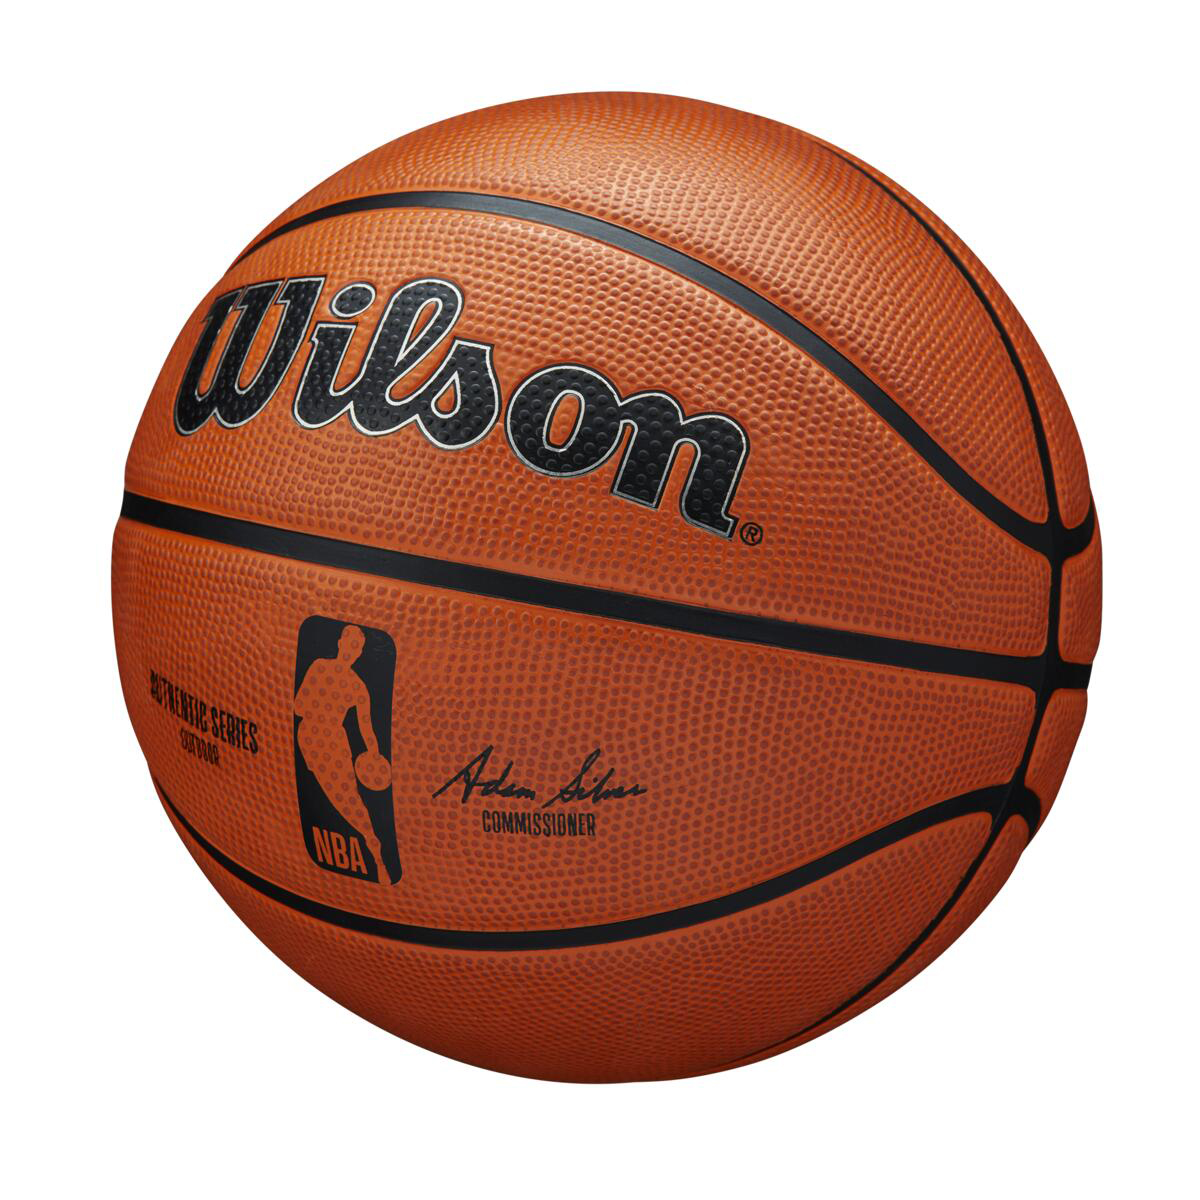 WILSON NBA  OUTDOOR BASKETBALL BROWN